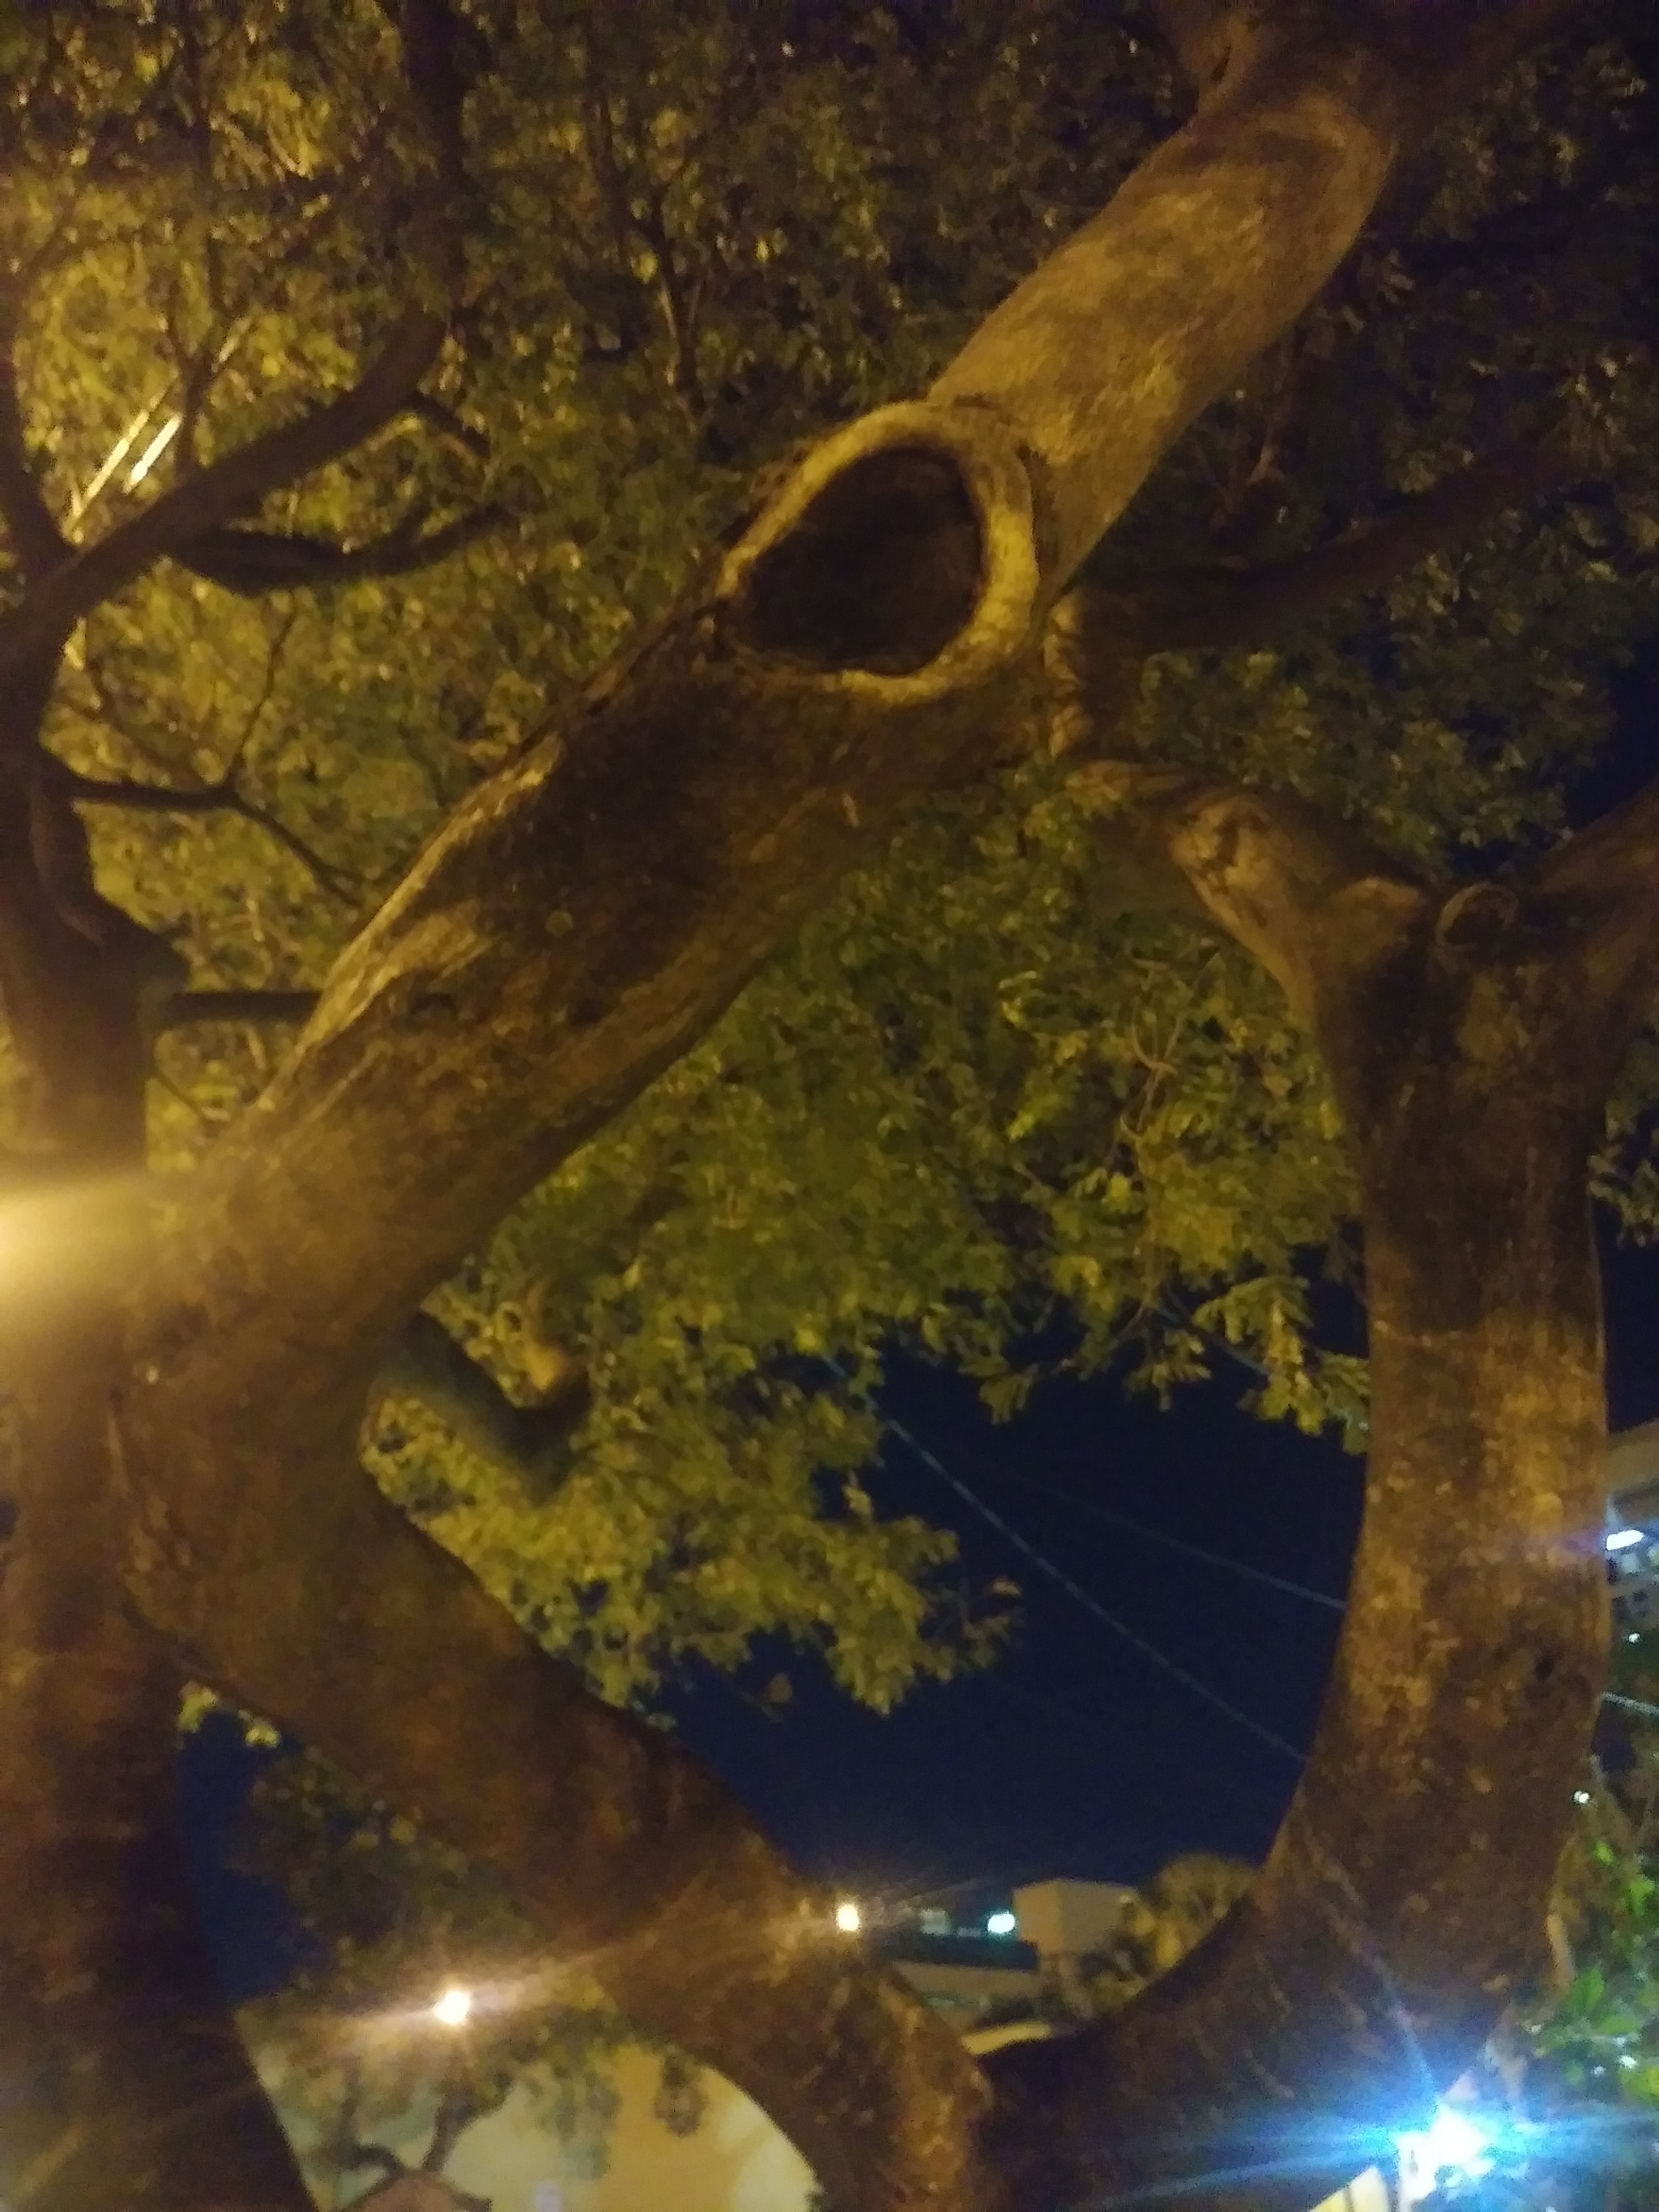 LG STYLO 3 PLUS sample photo. Night tree photography